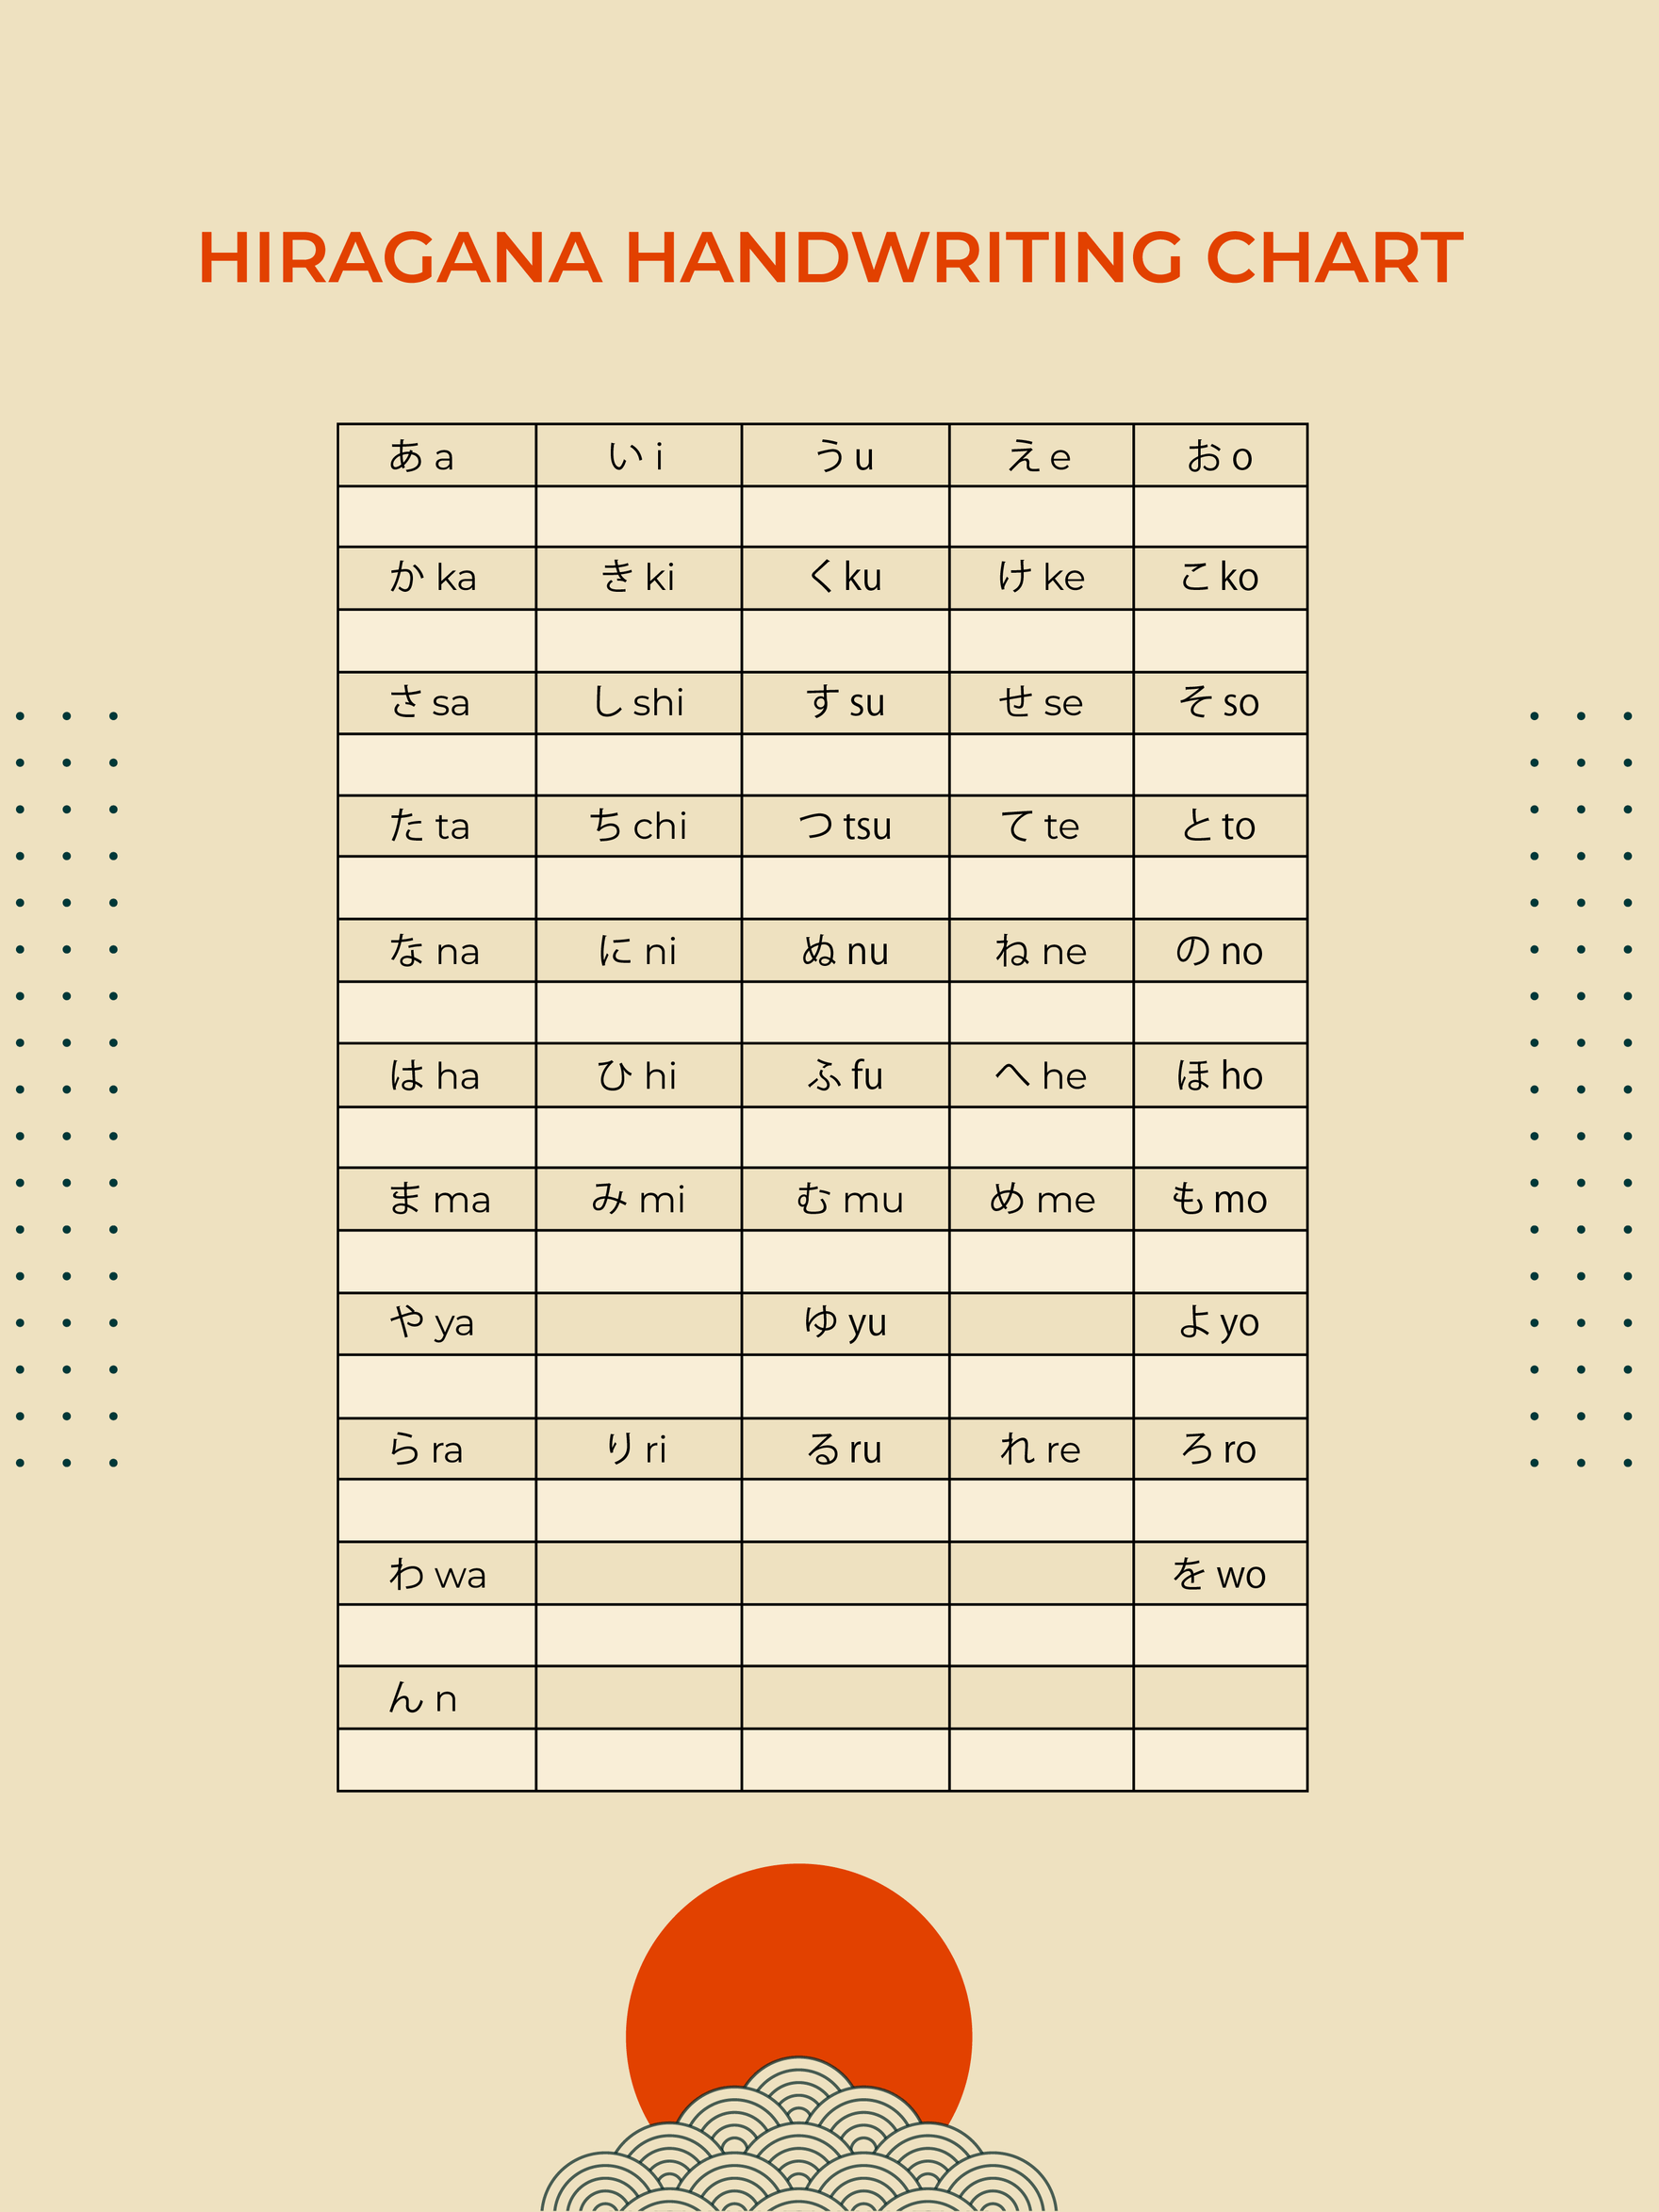 Hiragana Handwriting Chart in PDF, Illustrator